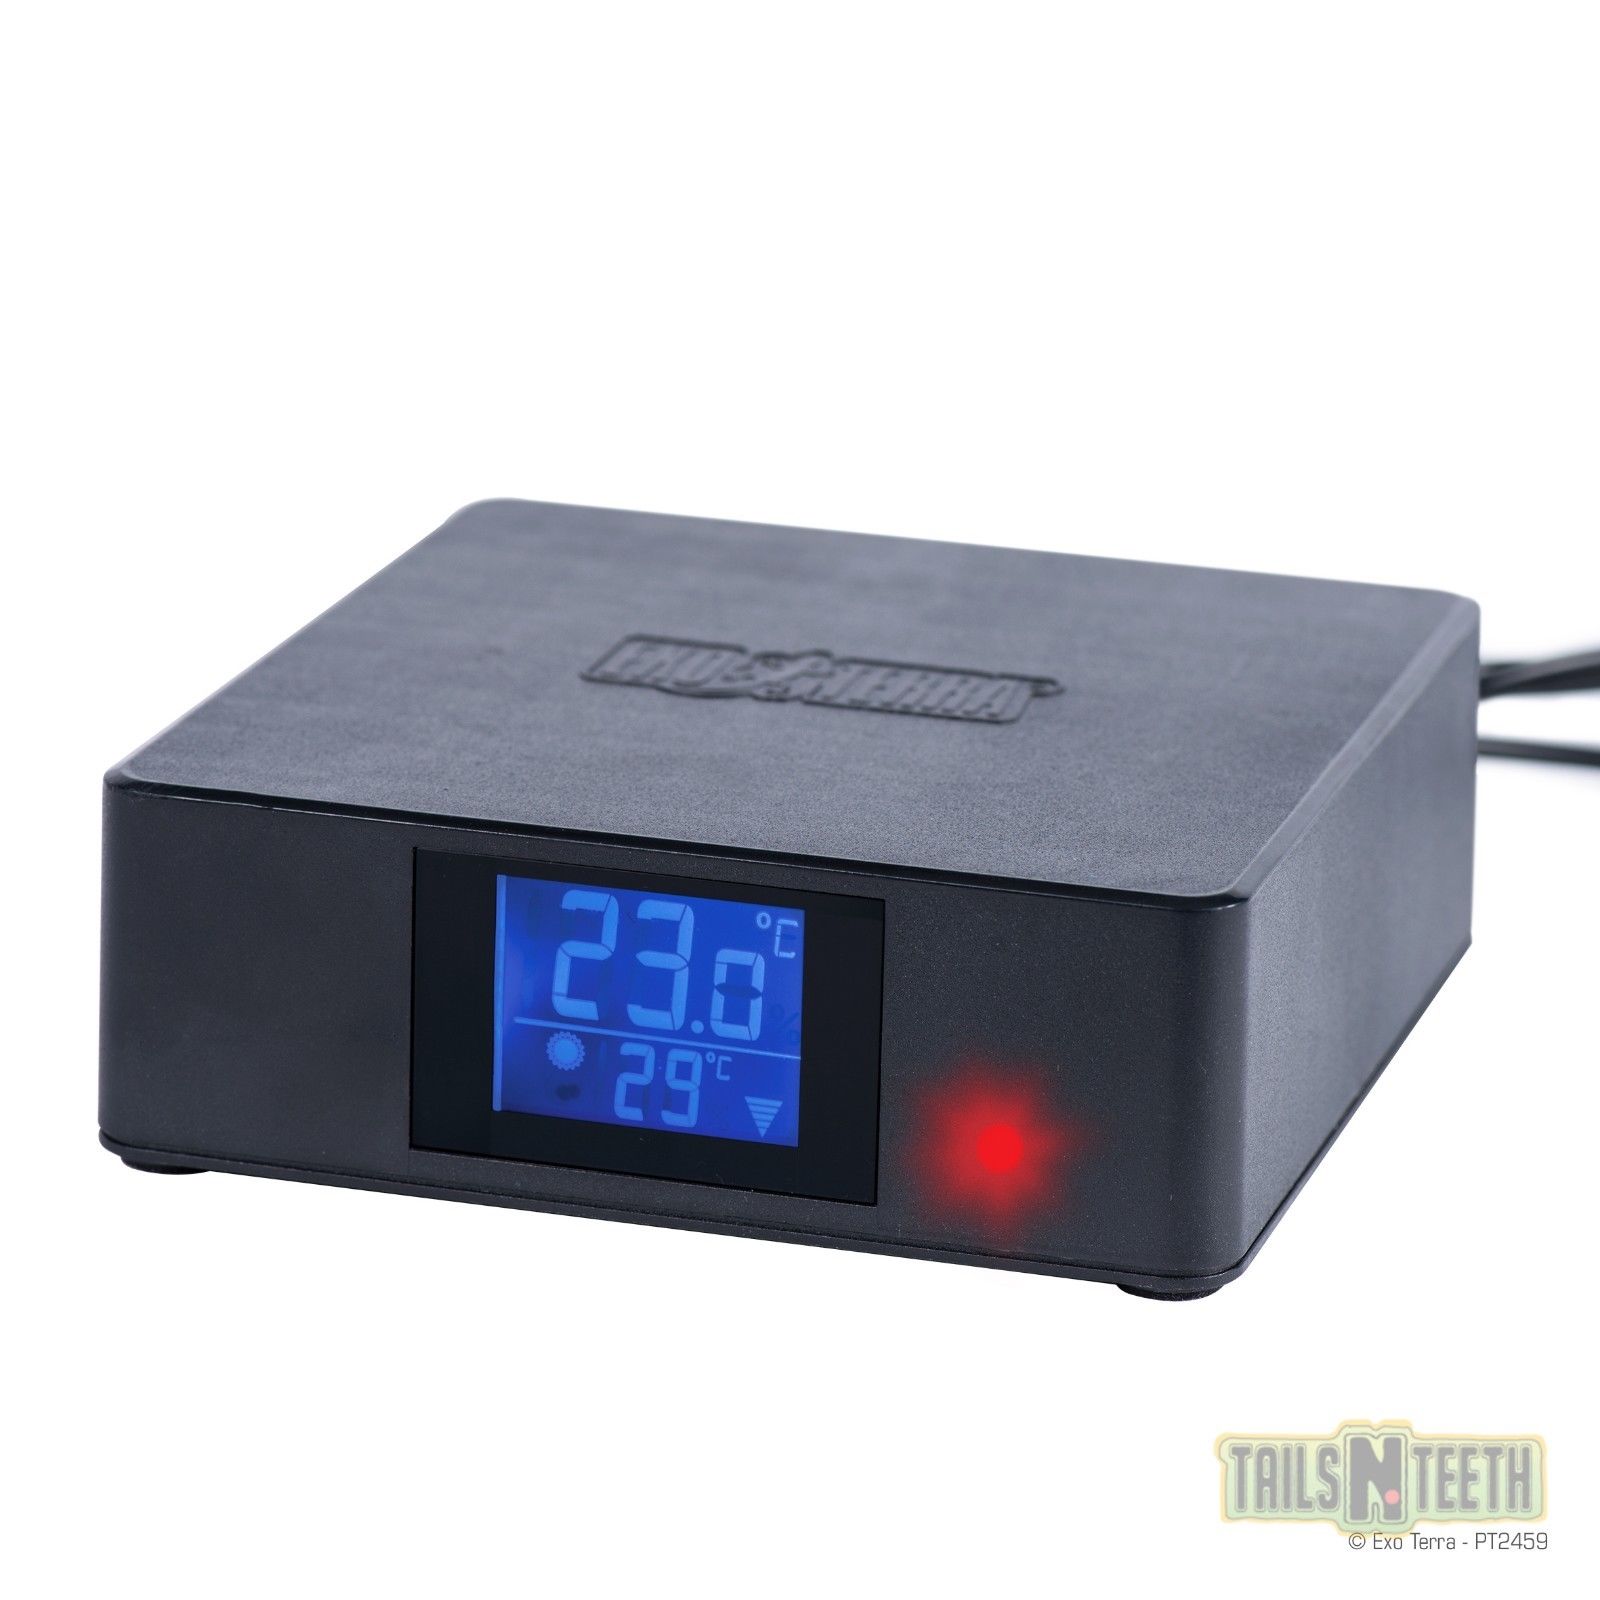 Reptile Terrarium Thermostat – 600W Dimmable